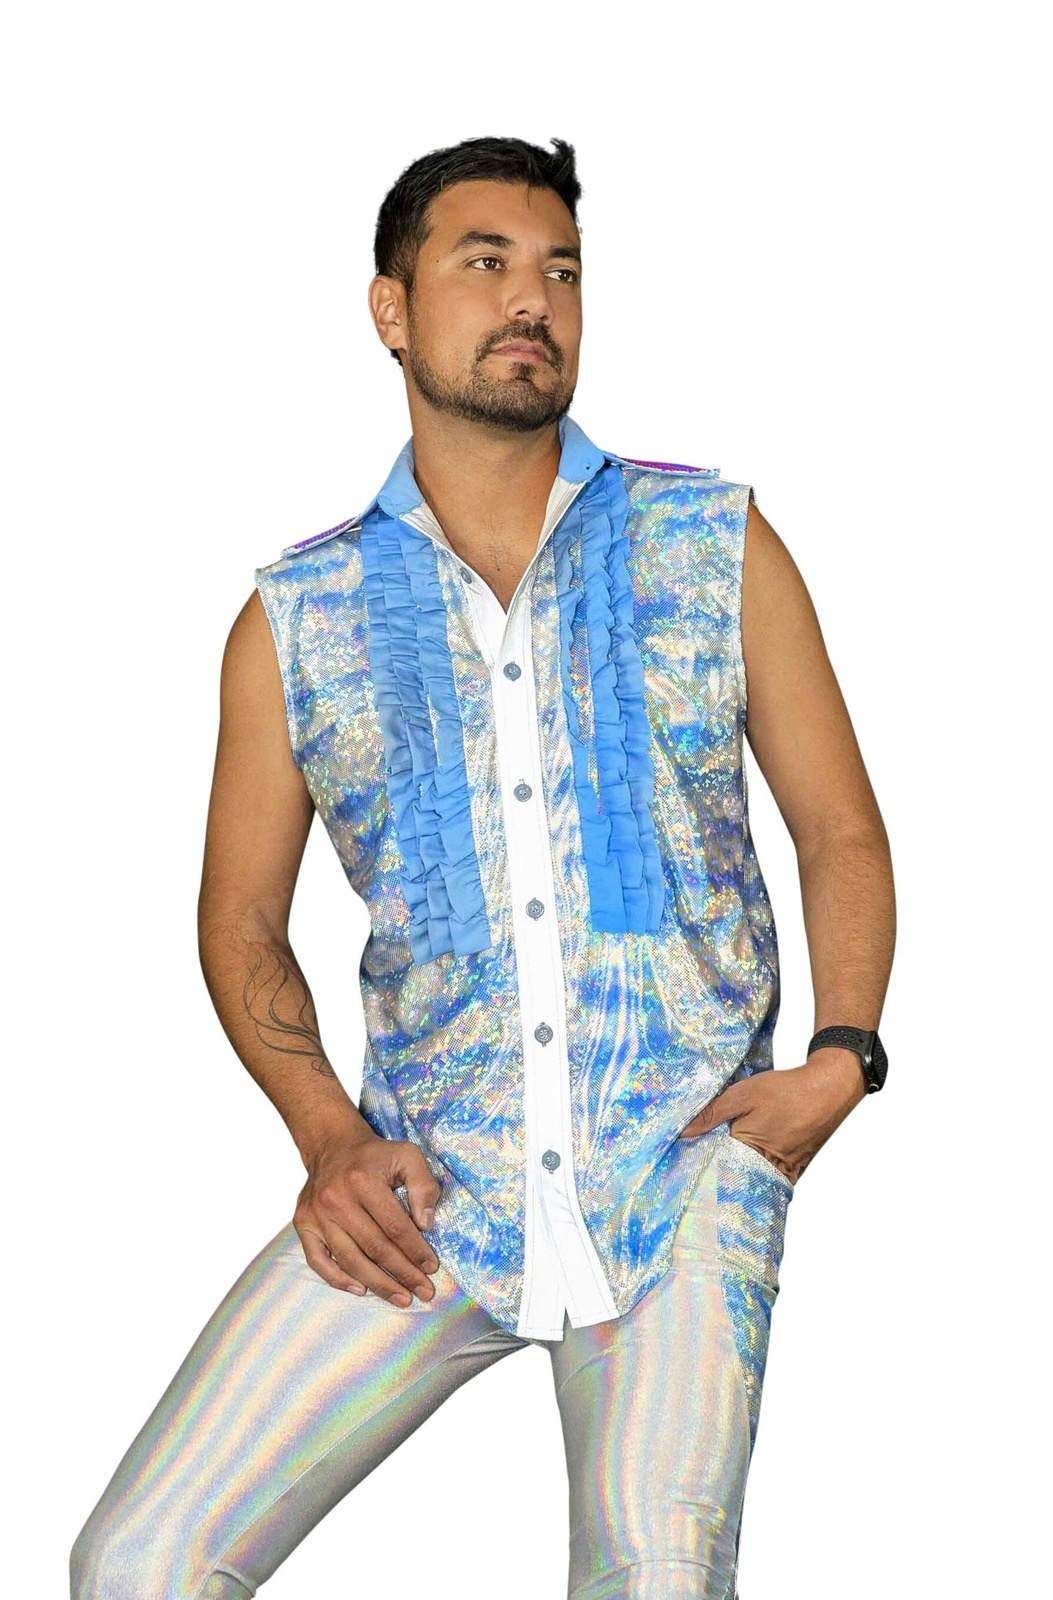 Holographic Powder Blue Ruffled Tuxedo Shirt from Love Khaos Festival Clothing Brand.